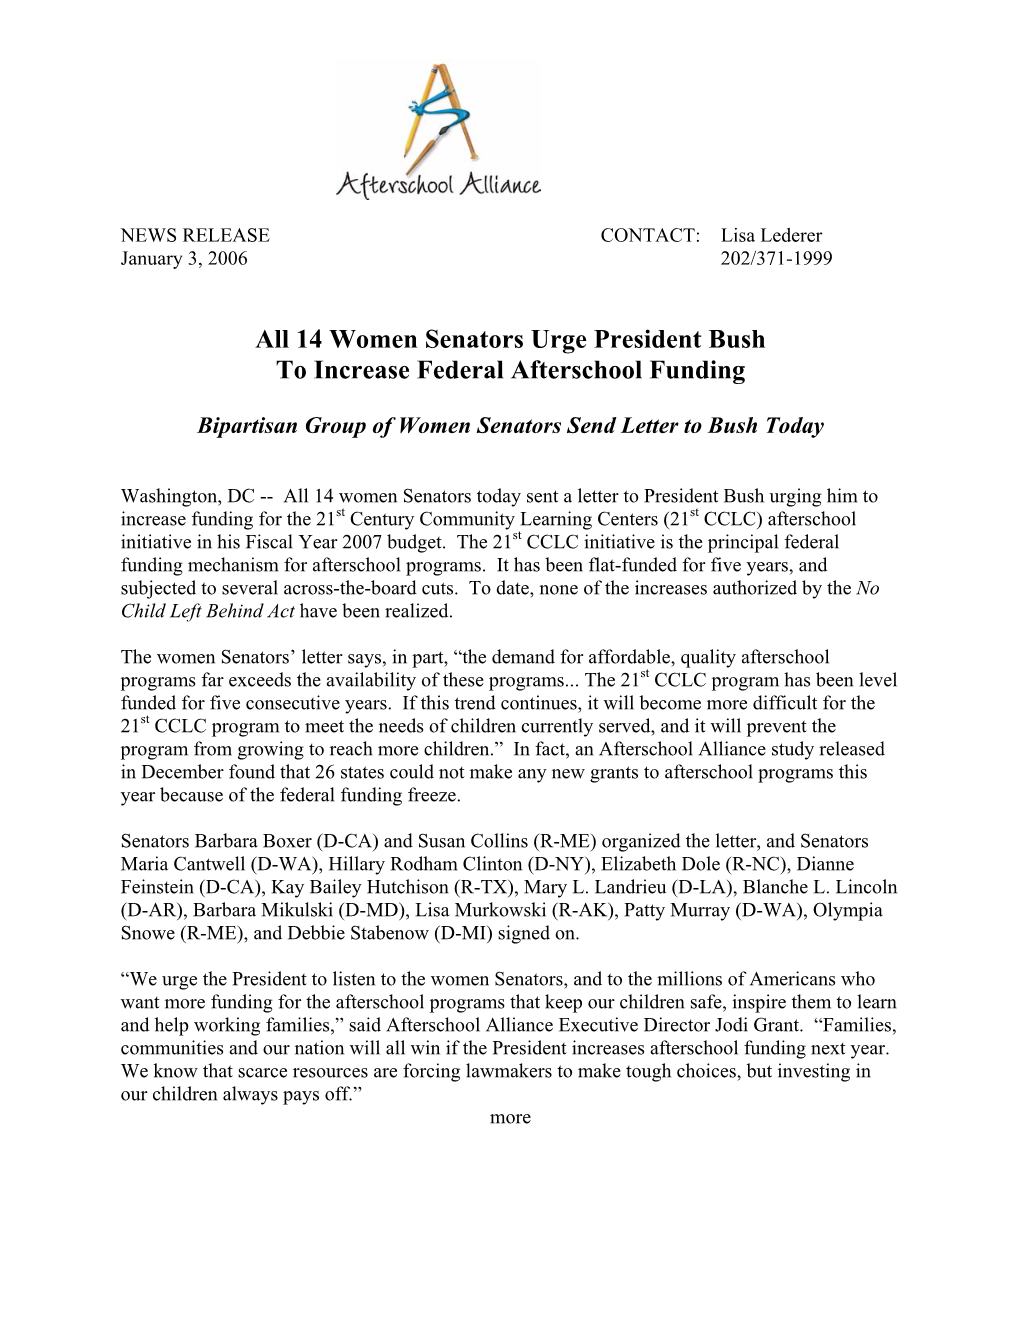 14 Women Senators Urge President Bush to Increase Federal Afterschool Funding